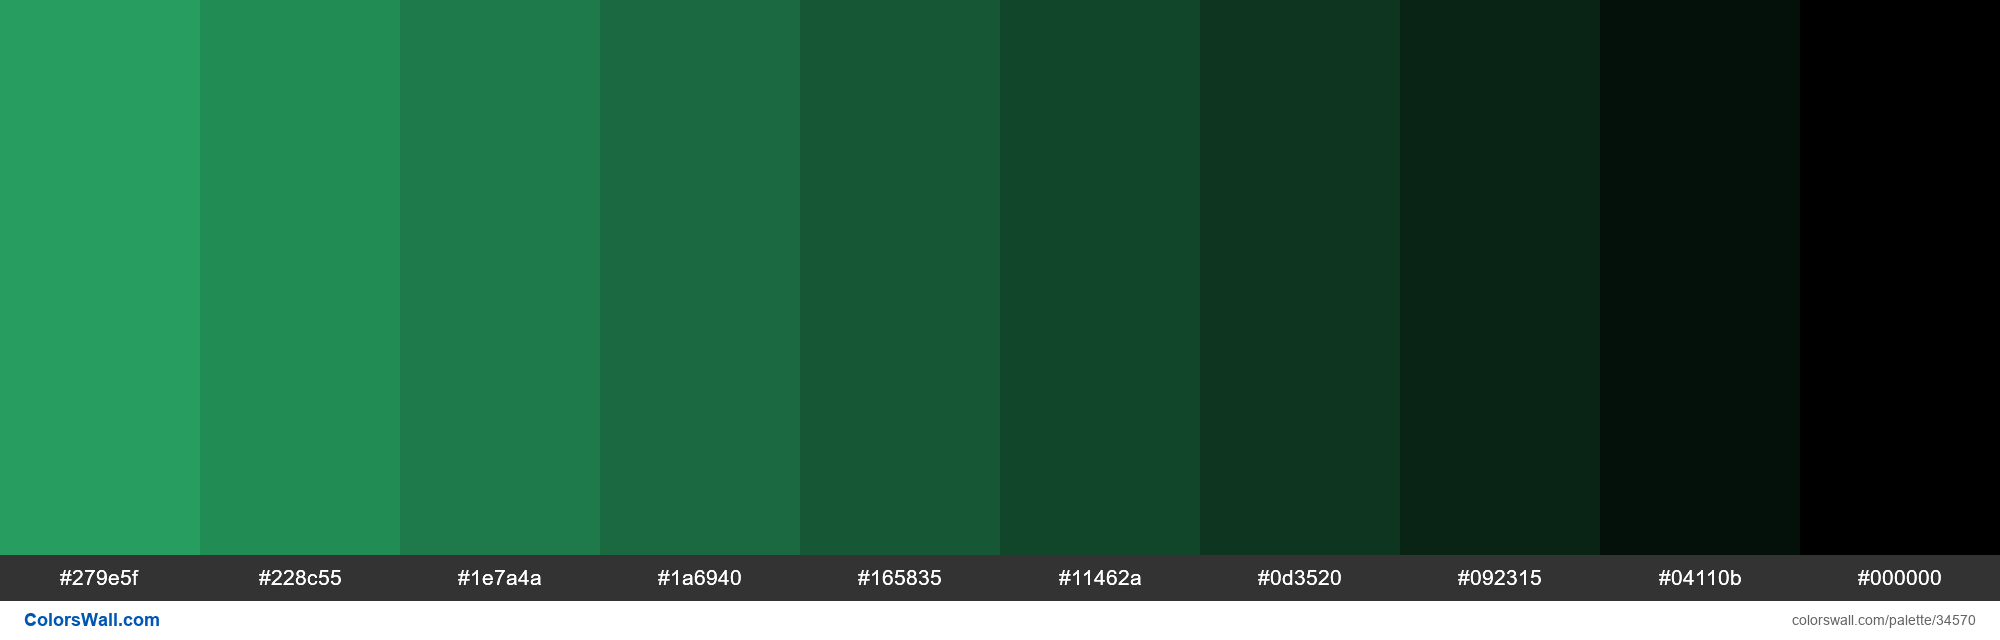 https://colorswall.com/images/palettes/shades-xkcd-color-jade-green-2baf6a-hex-34570-colorswall.png